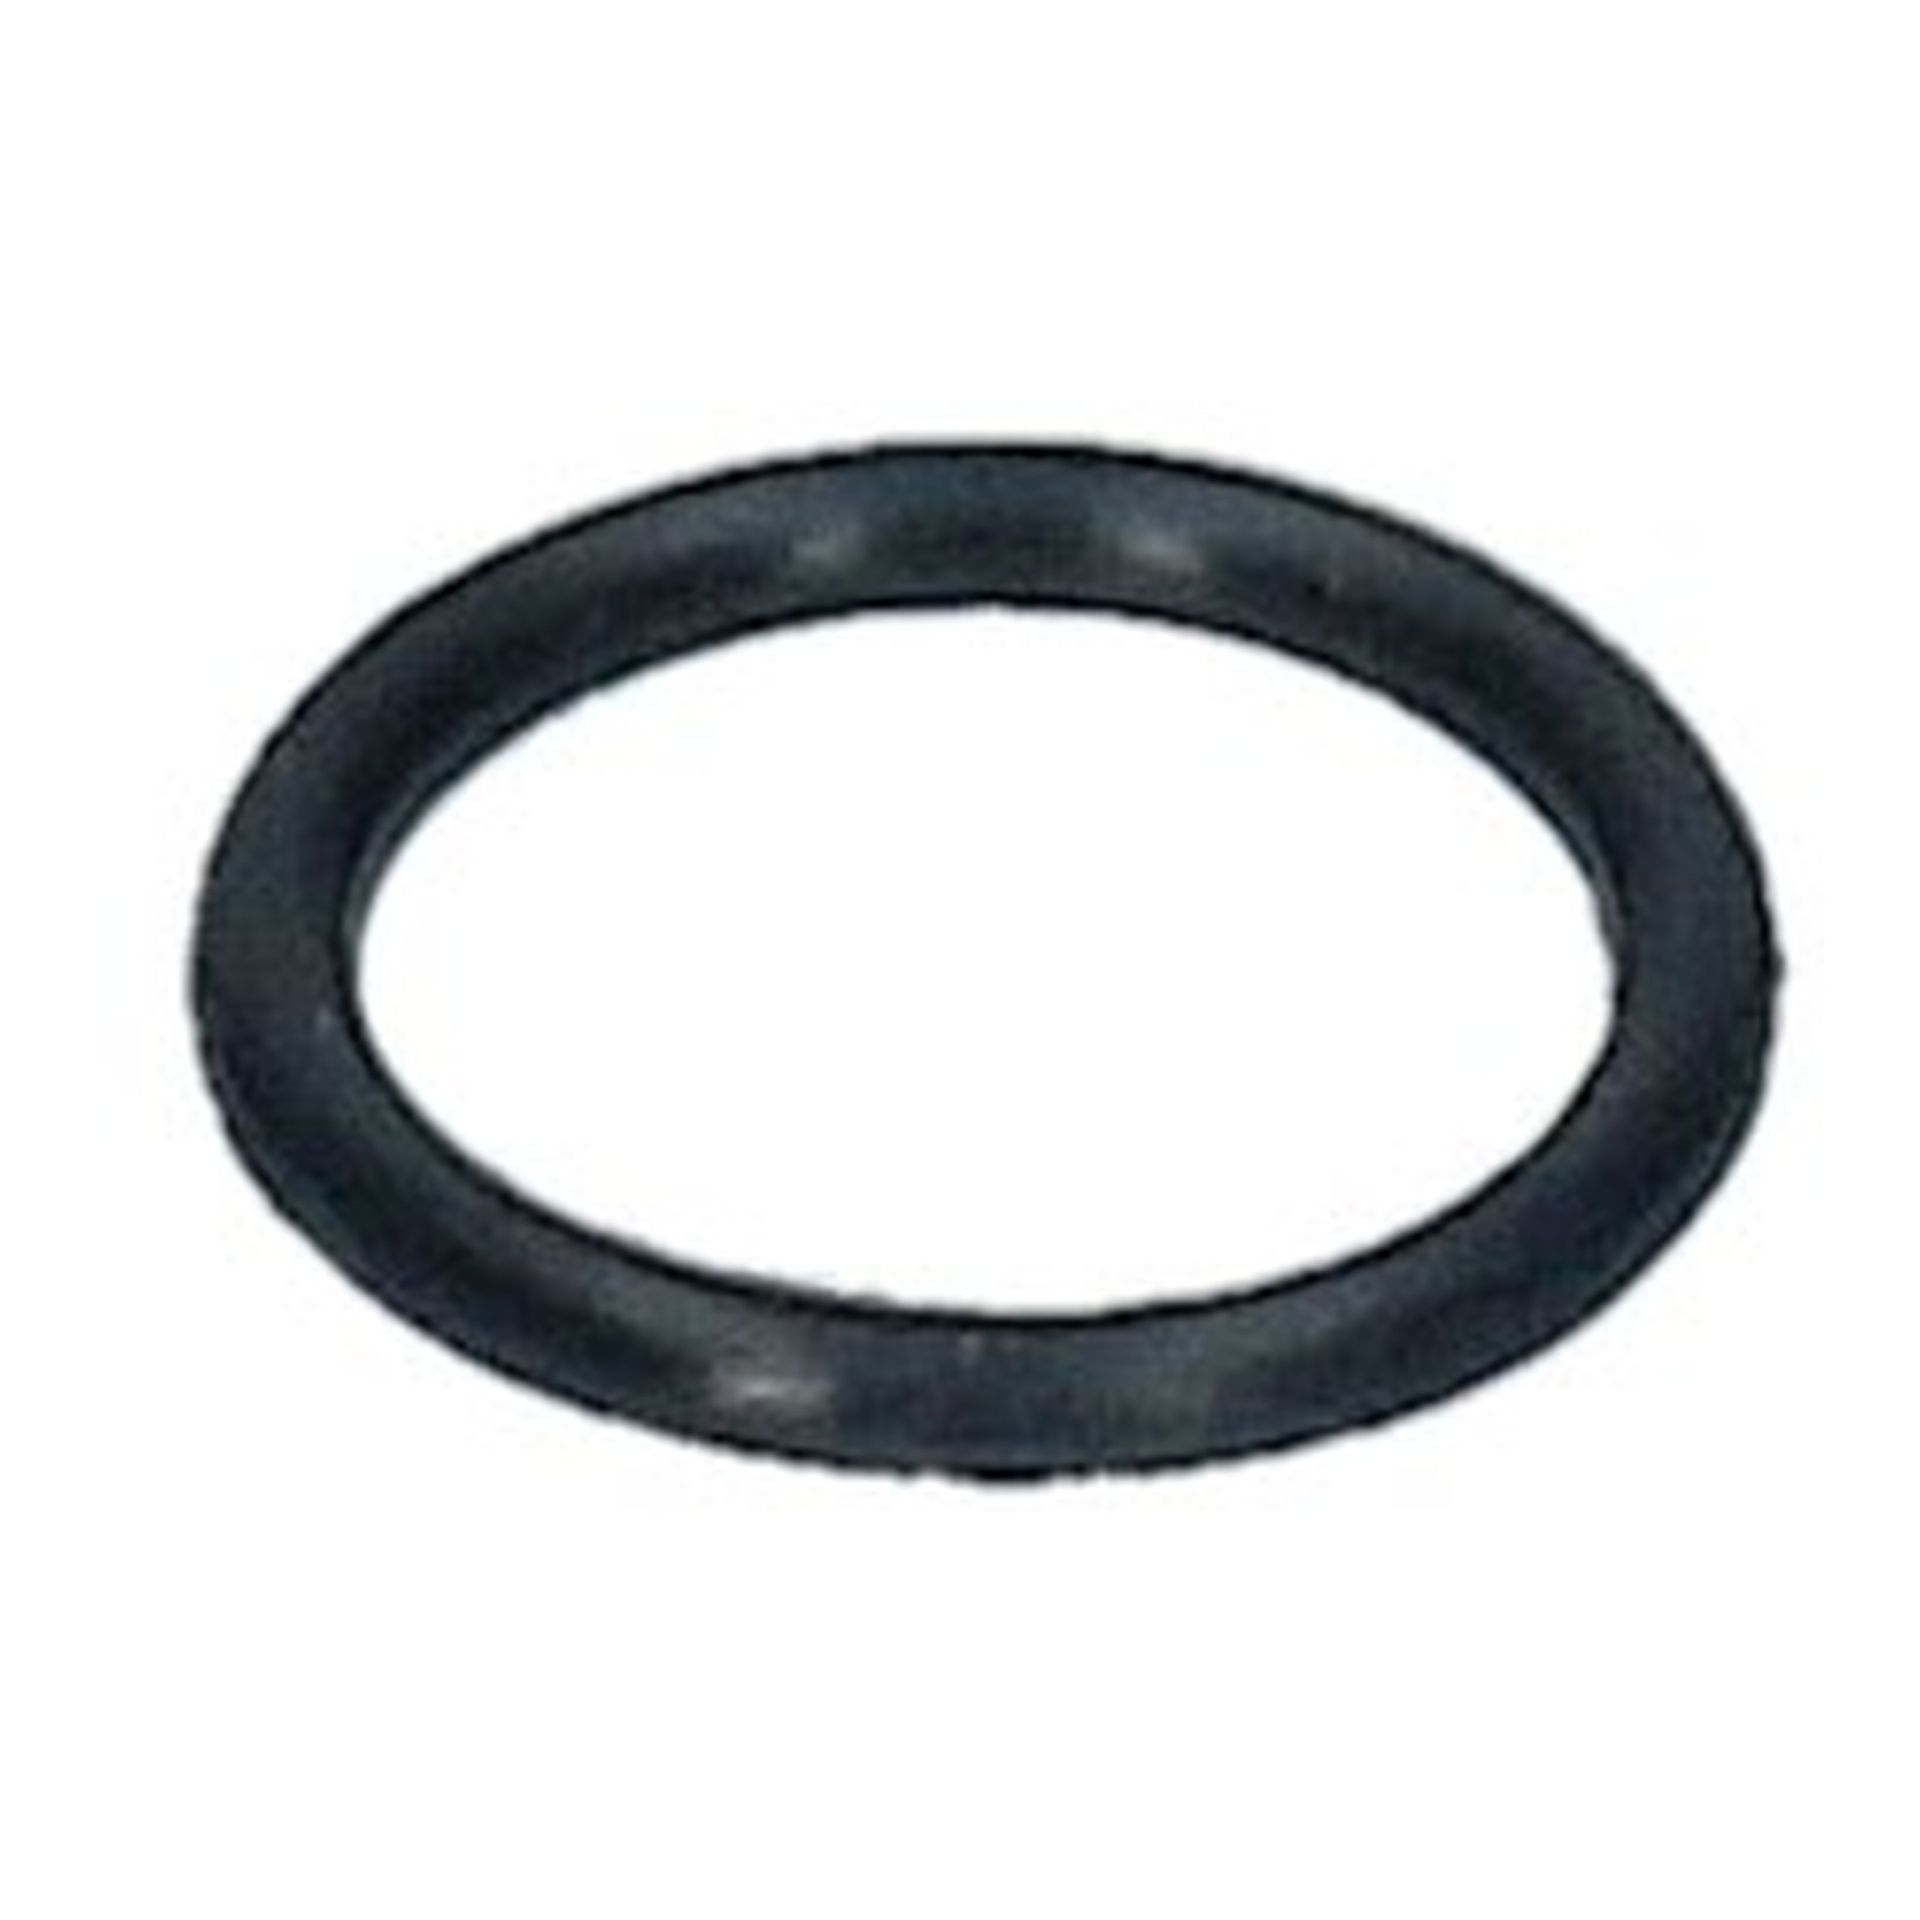 Rear Main Cap O-Ring (10x1.5)